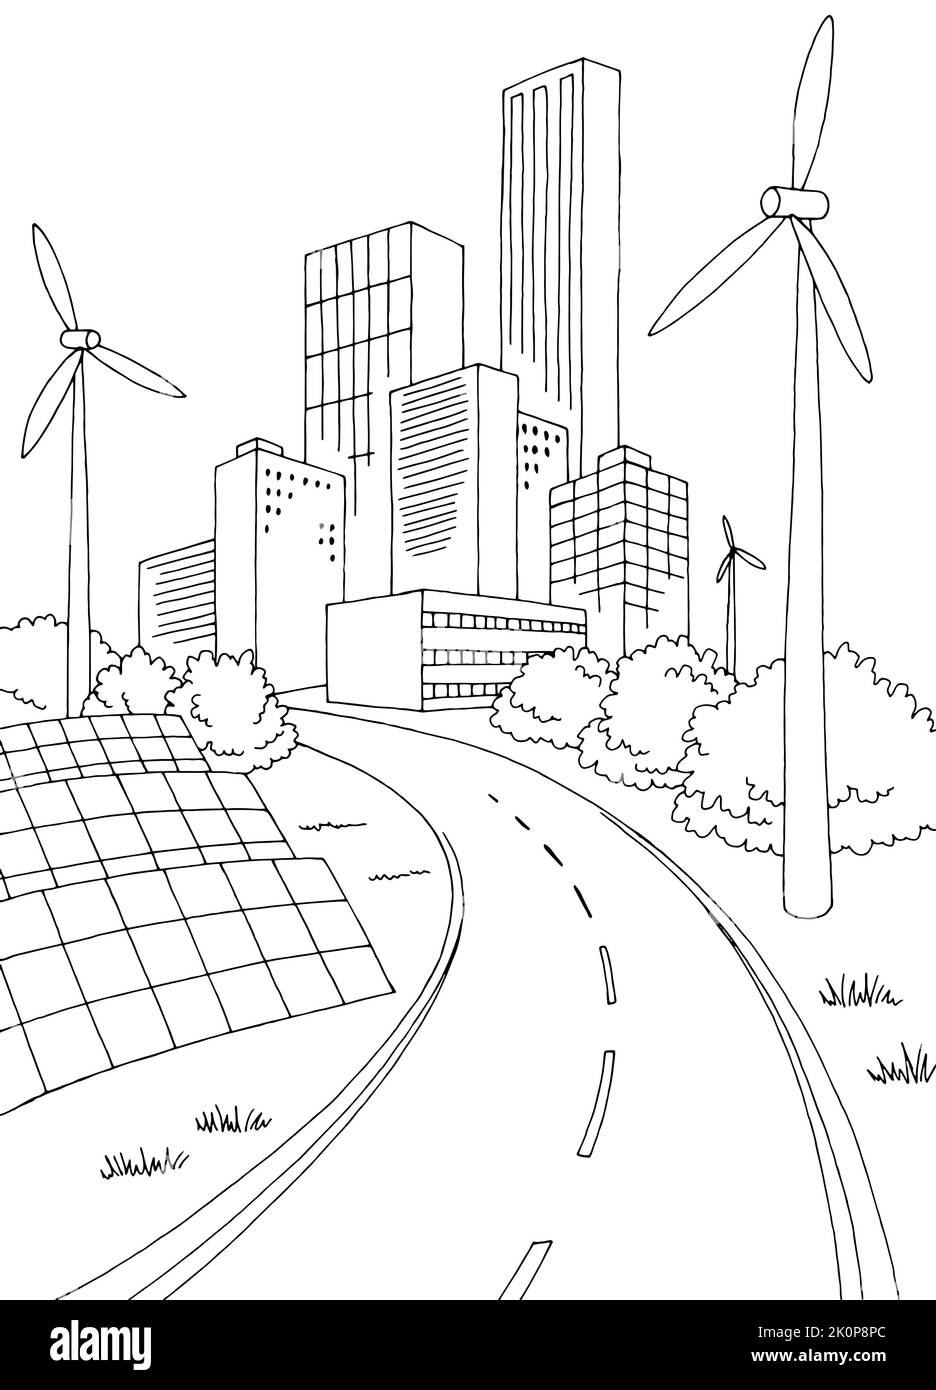 Eco City Grafik schwarz weiß Stadtbild Skyline vertikale Skizze Illustration Vektor Stock Vektor